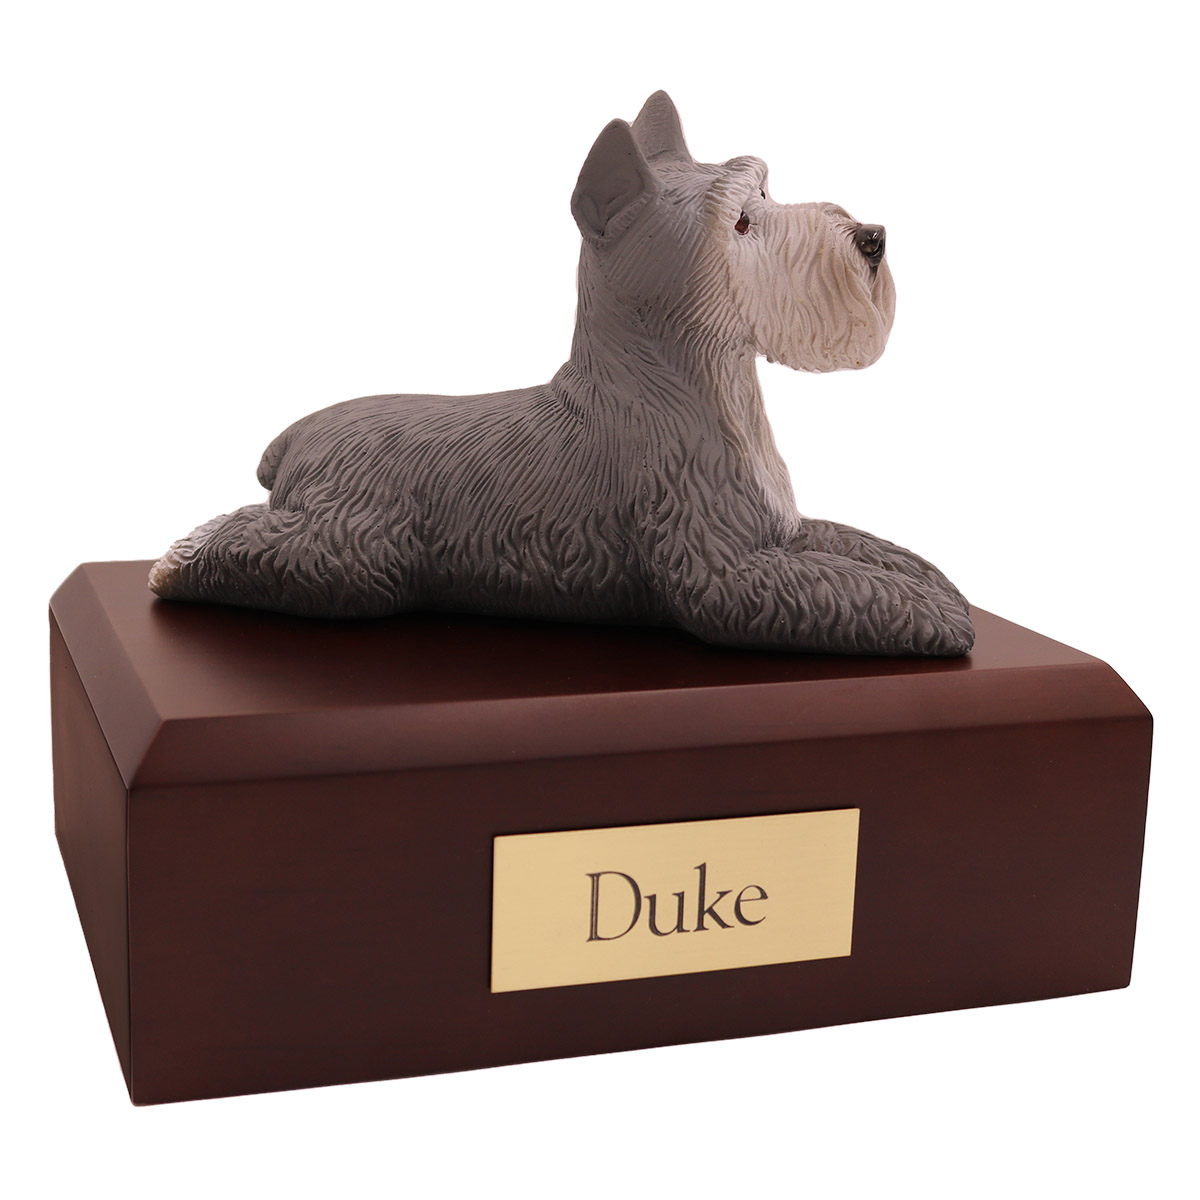 Dog, Schnauzer, Grey (Ears Up) - Figurine Urn